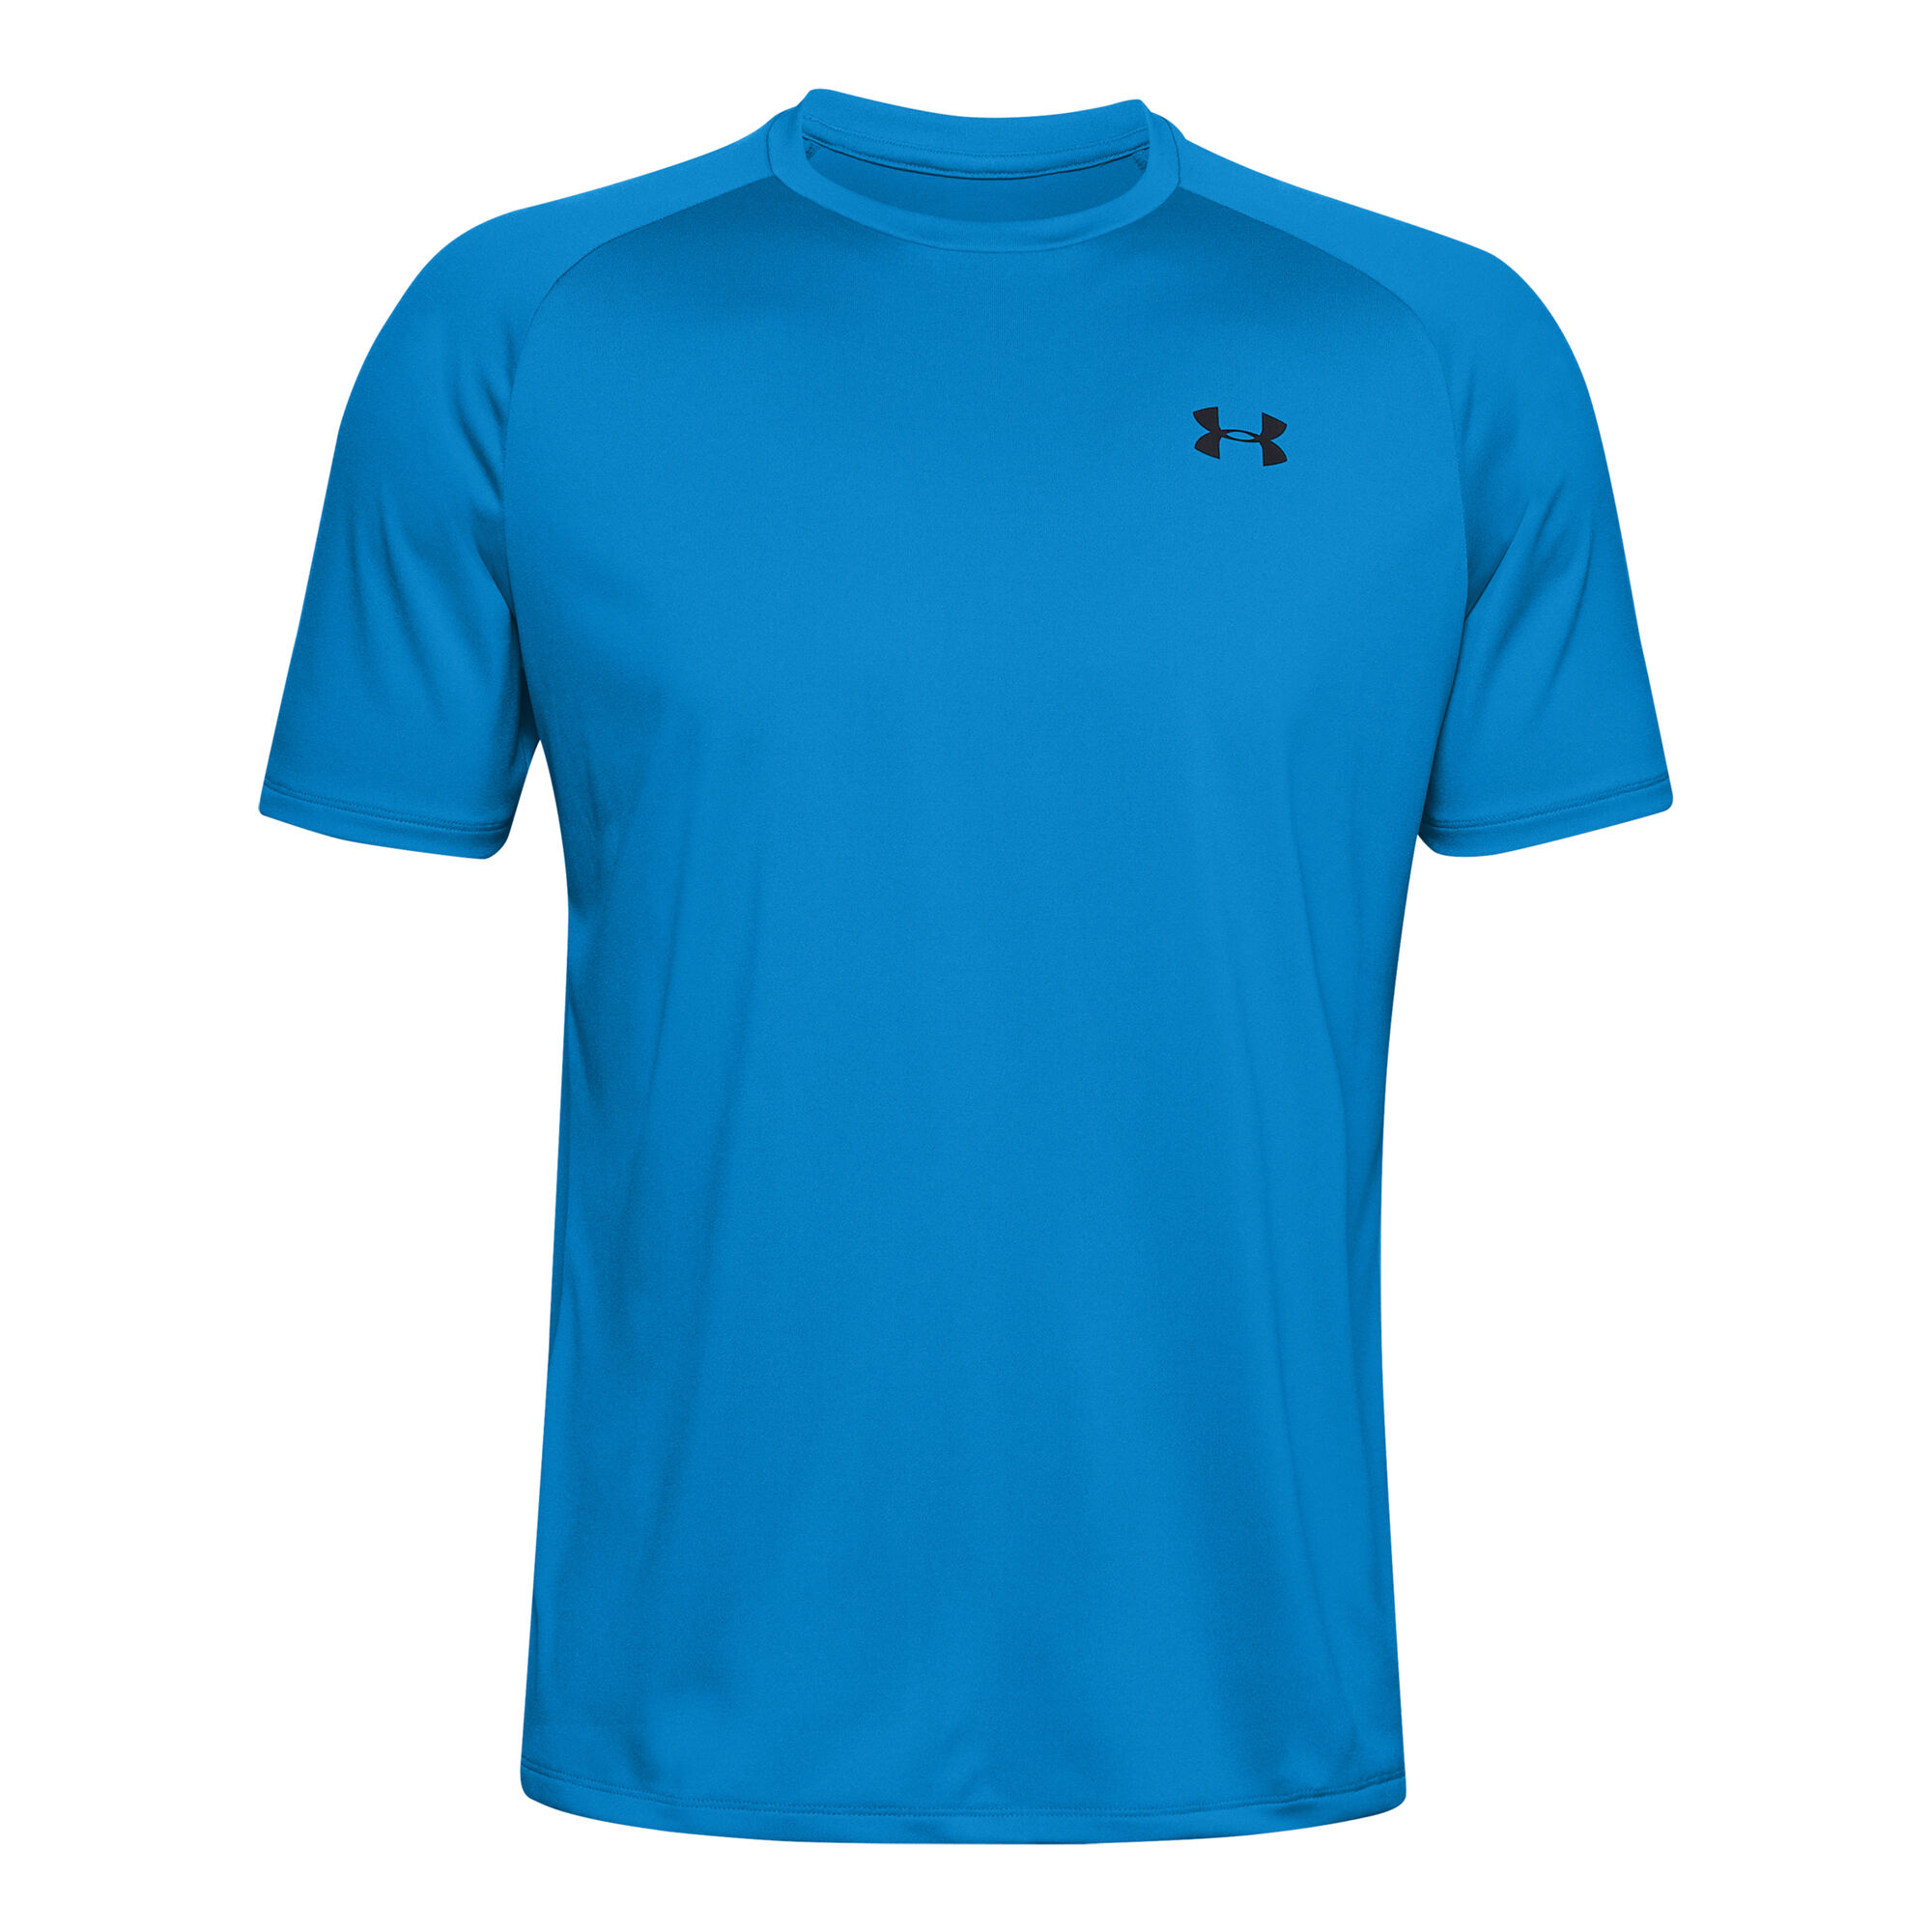 buy Under Armour Tech 2.0 T-Shirt Men - Blue, Black online | Tennis-Point